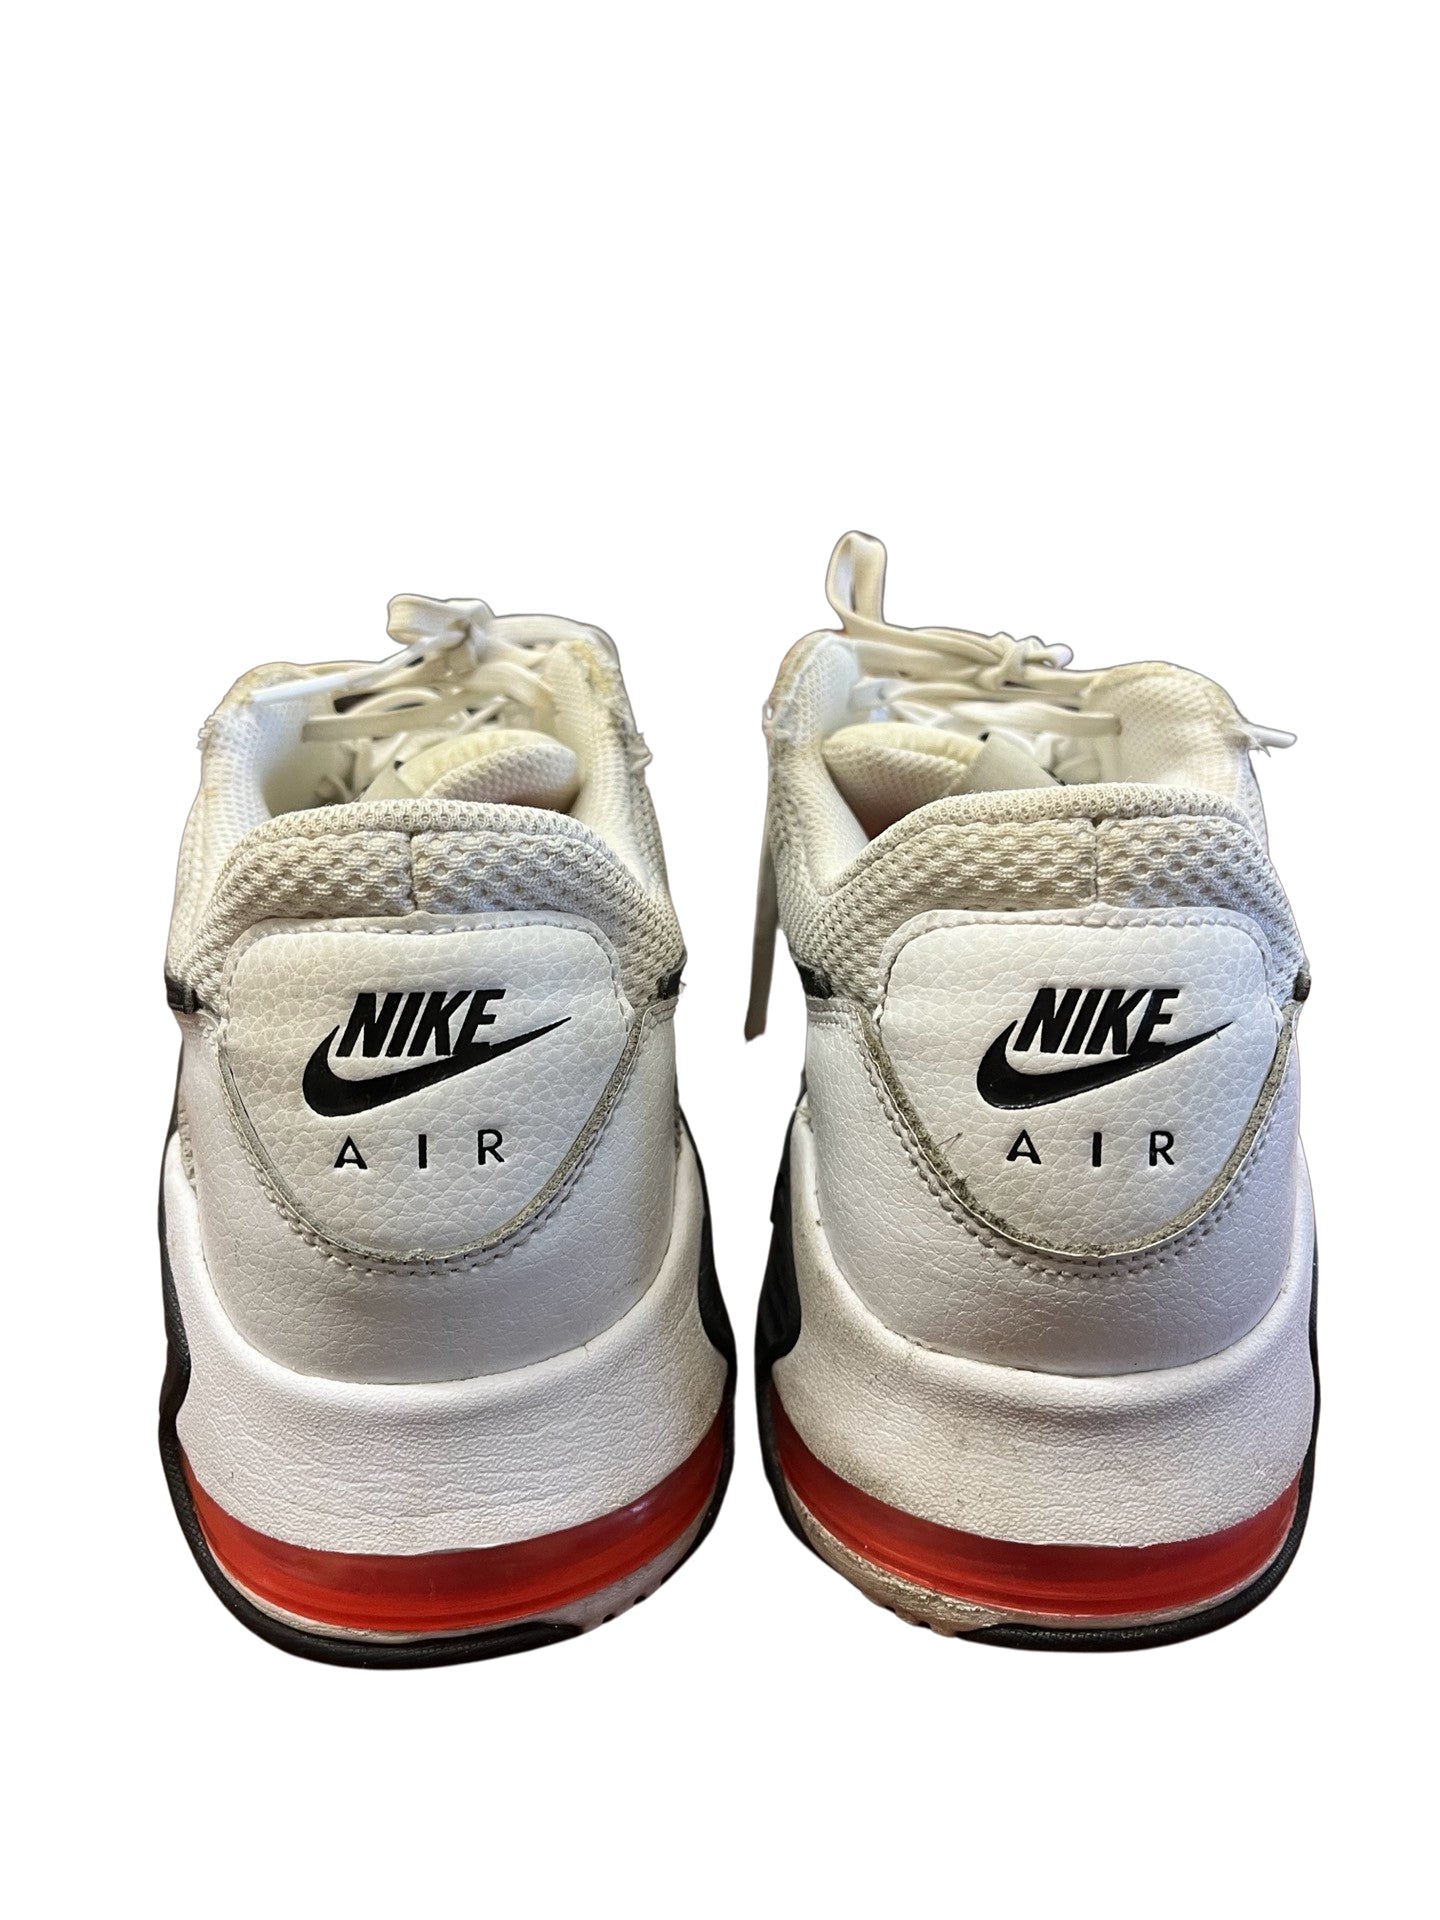 Nike Size 10 White sneakers